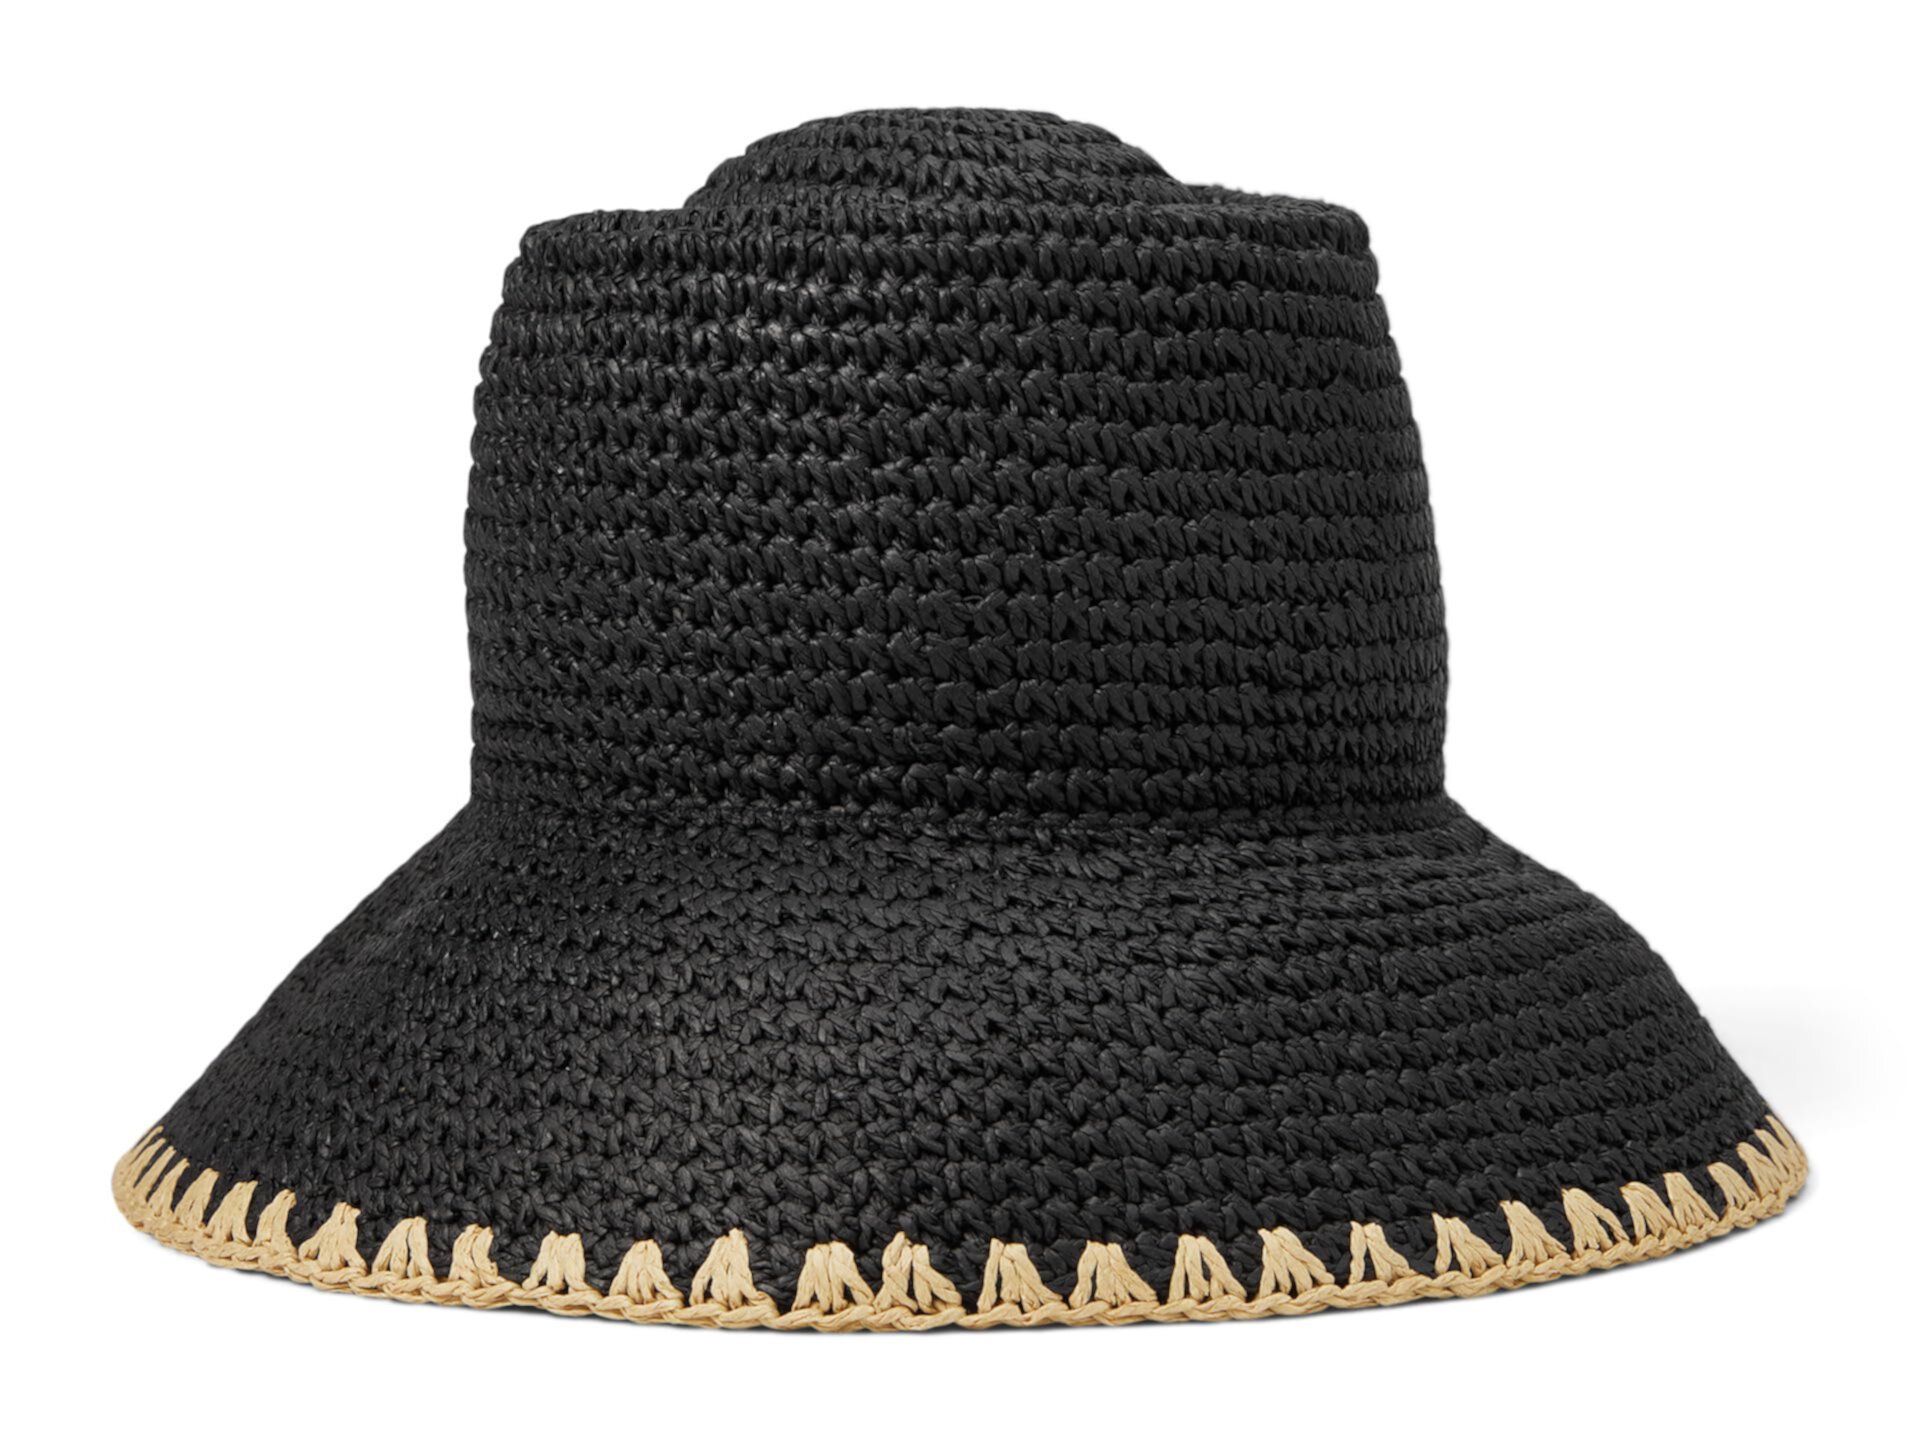 Соломенная шляпа Уипстич Madewell